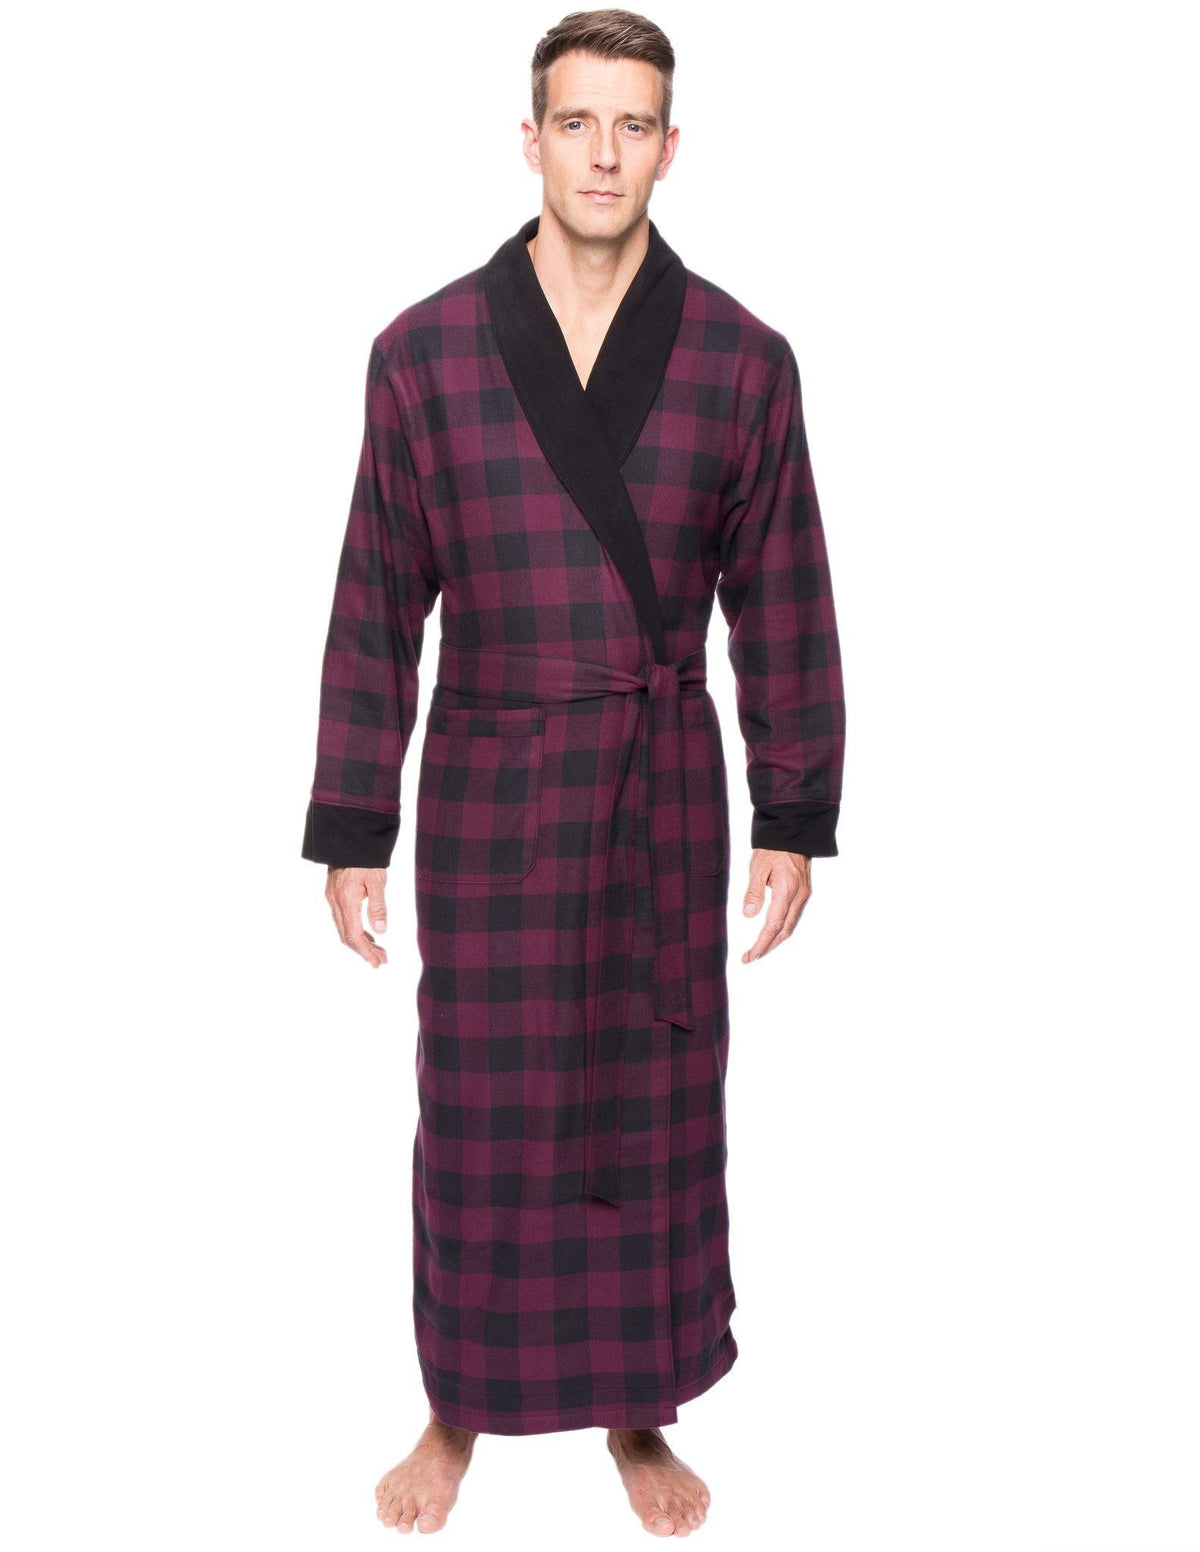 Men's Premium 100% Cotton Flannel Fleece Lined Robe - Gingham Fig/Black